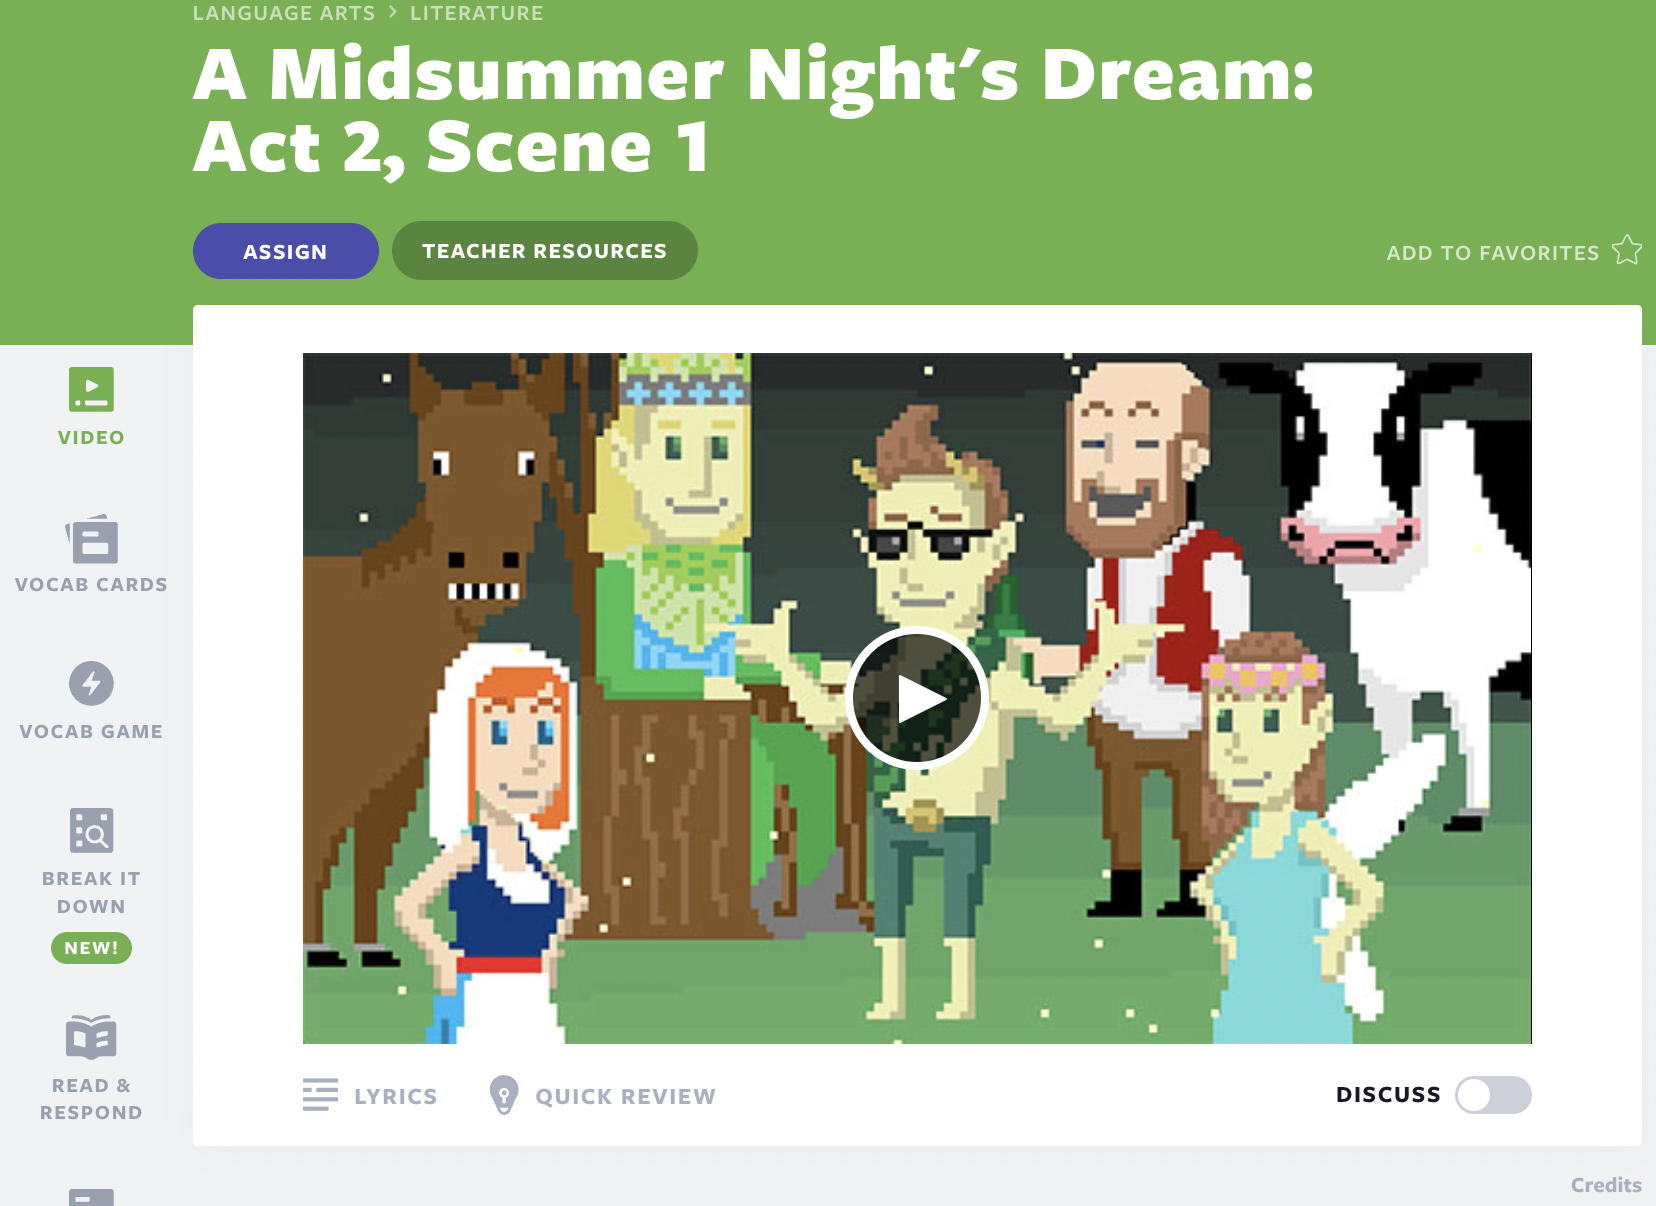 A Midsummer Night's Dream: Act 2, Scene 1 lesson cover